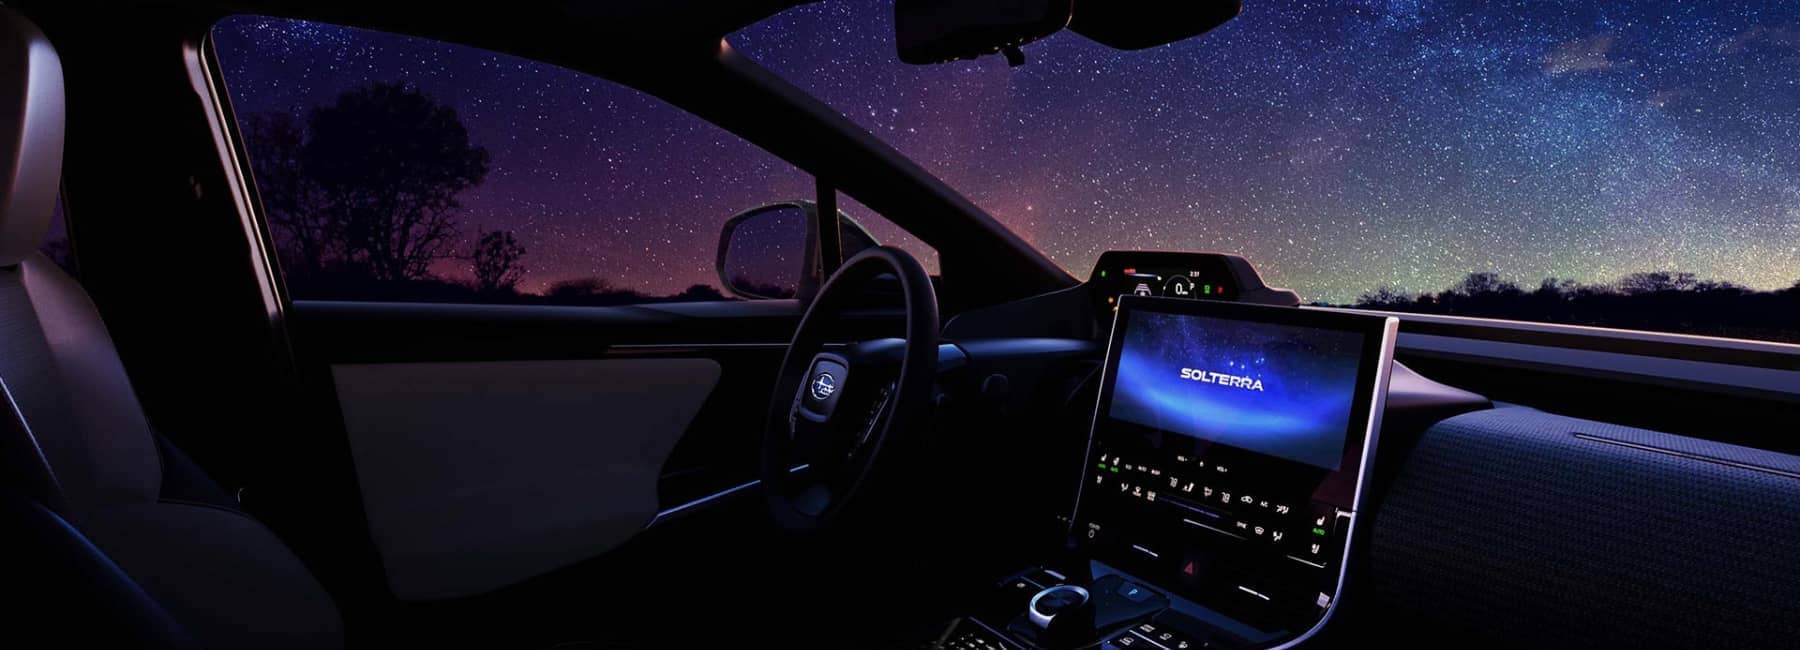 2022 Subaru Solterra-interior view with starry sky